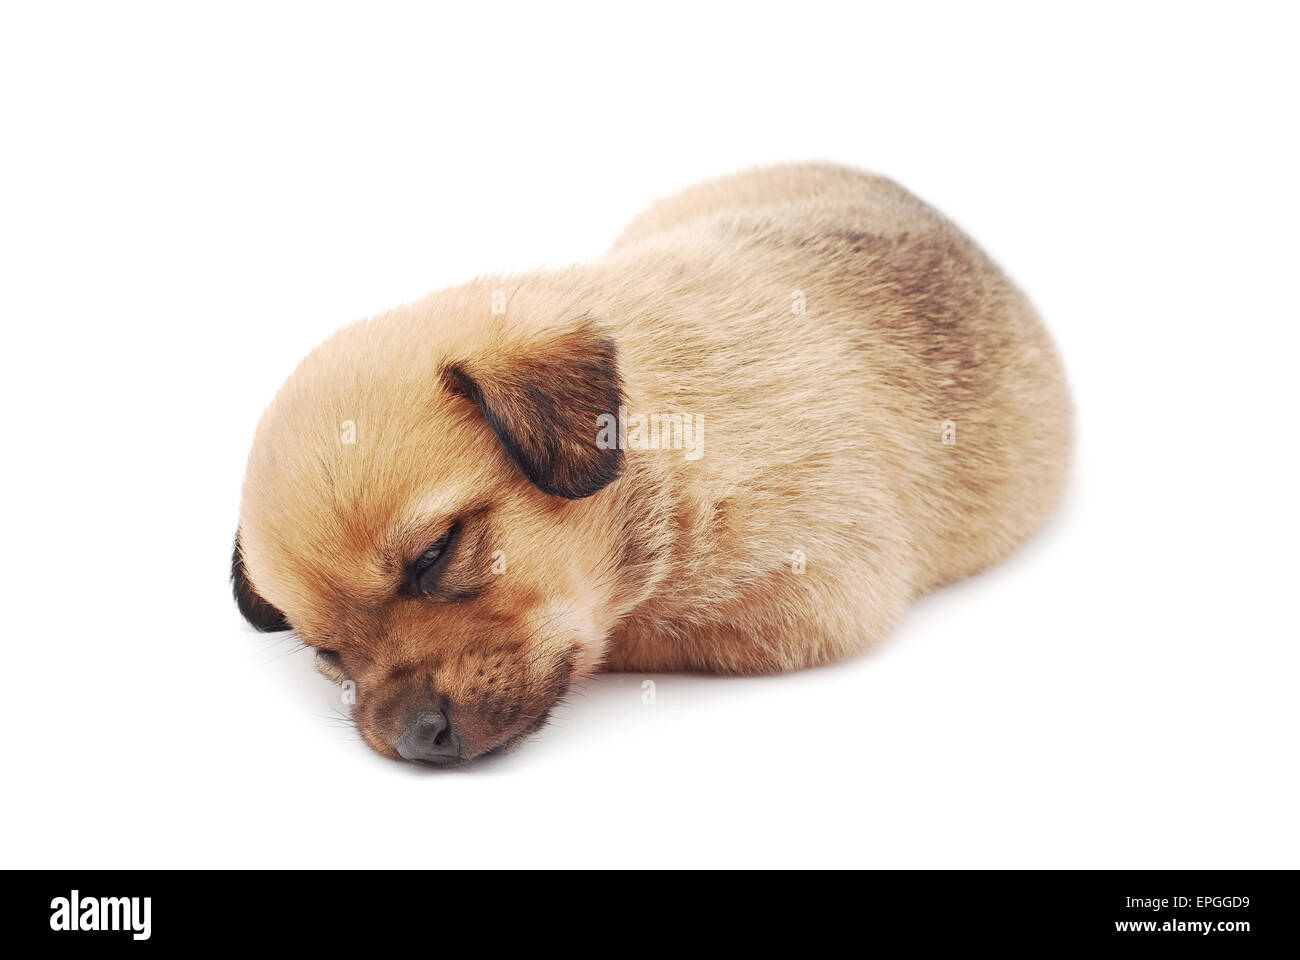 sleeping puppy on white background Stock Photo